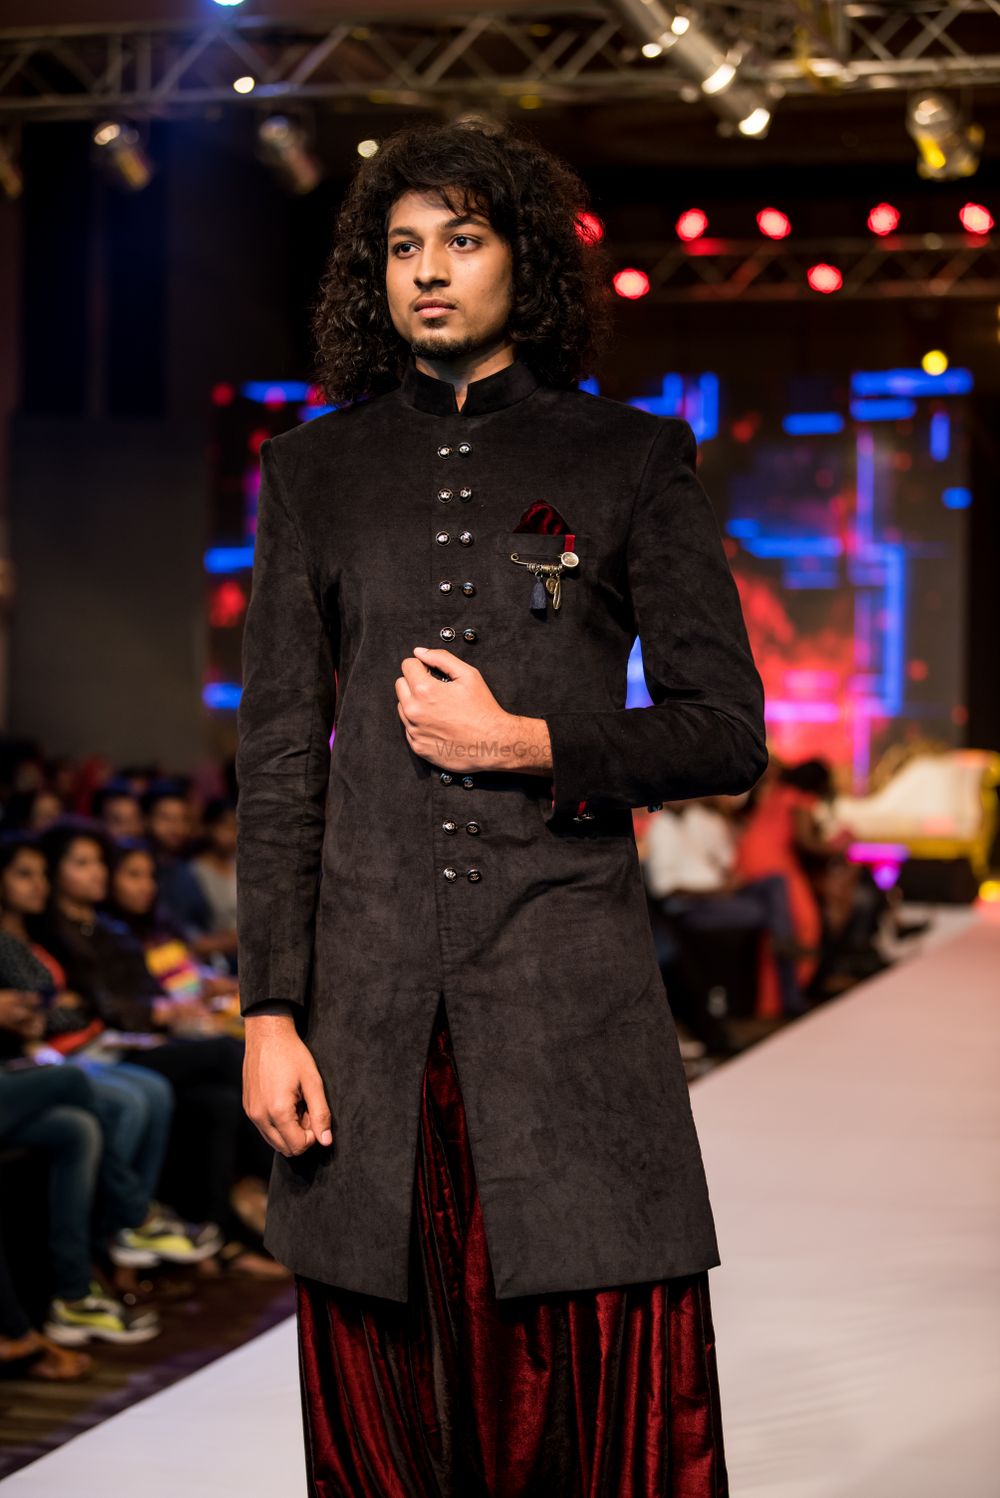 Photo From Indian Fashion League Season 2 - By Meraj Ek Pehchan